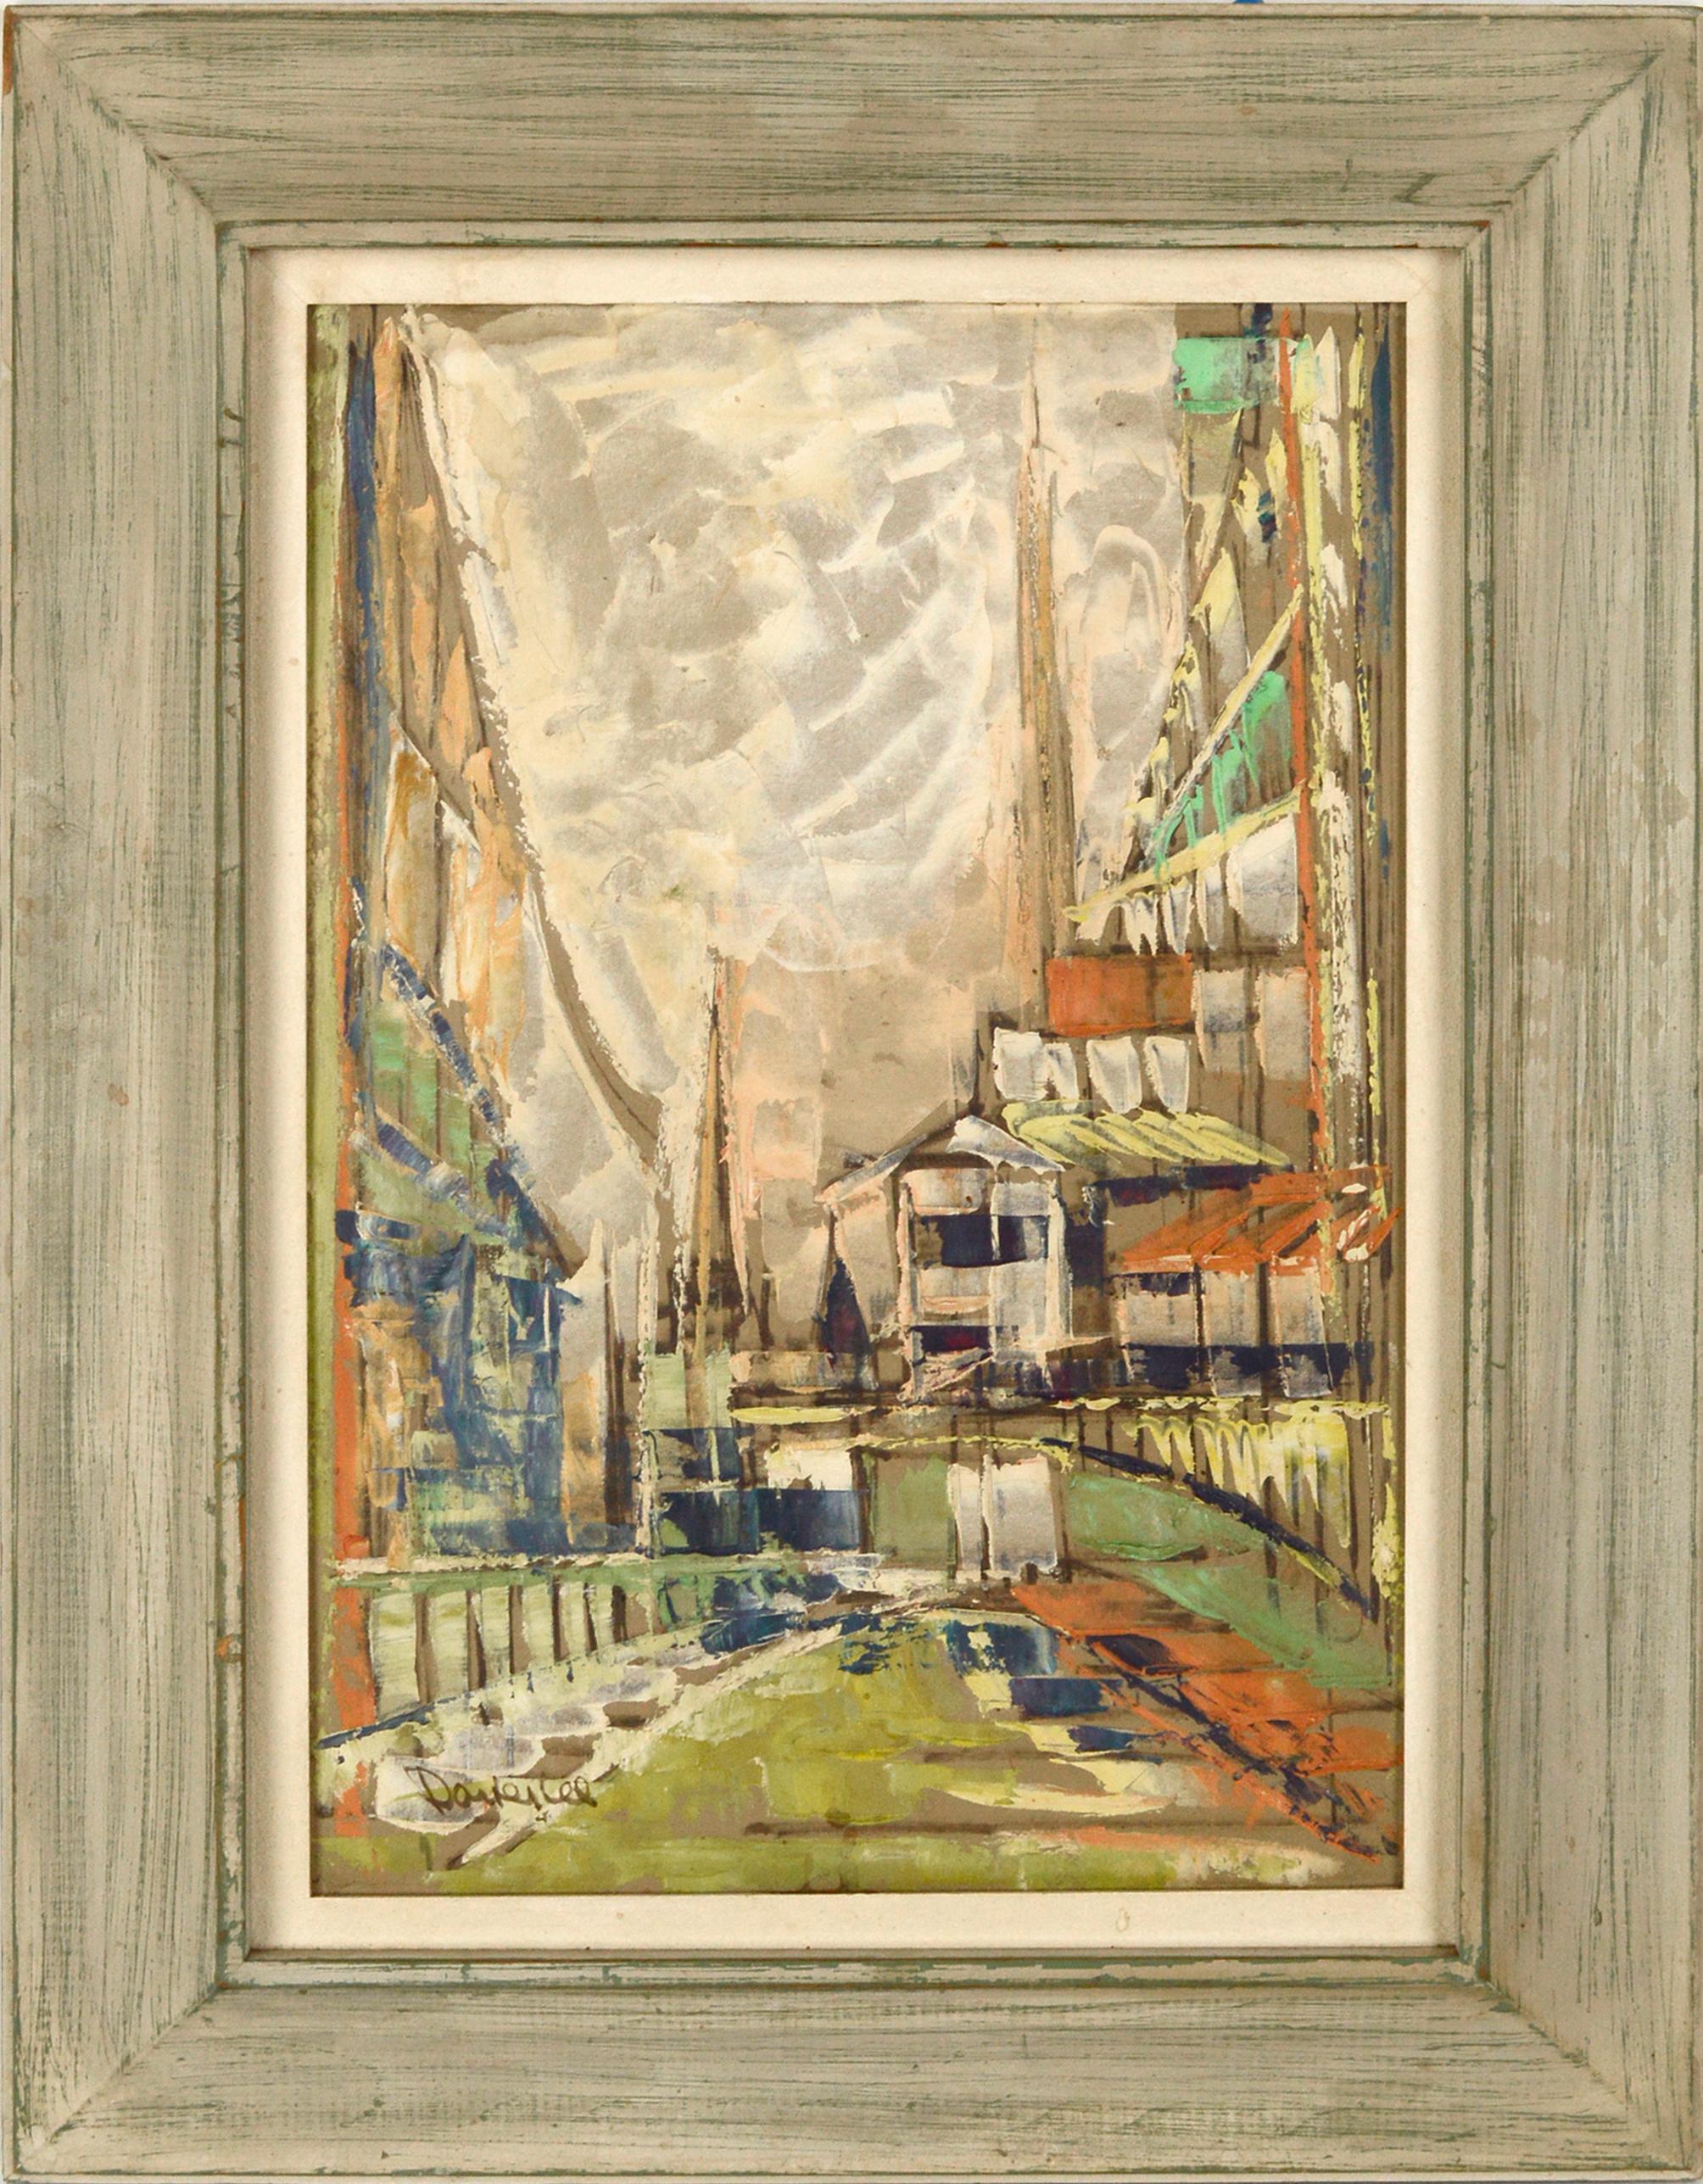 Leonard (Parker Lee) Leibsohn Landscape Painting - Abstract Village Scene Original Oil Painting